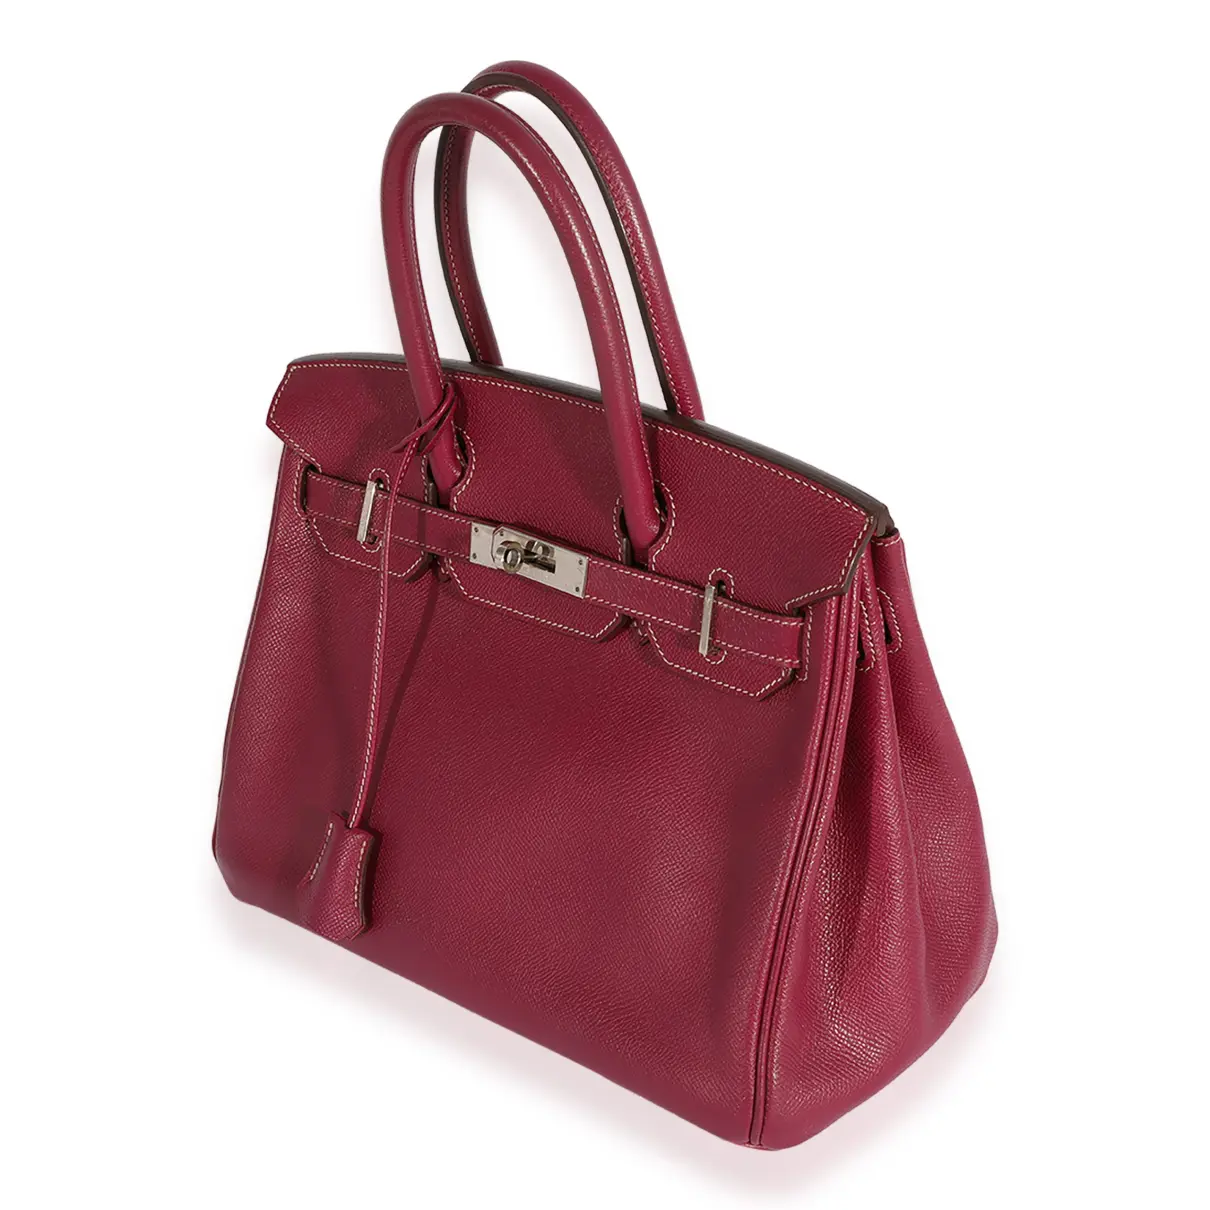 Buy Hermès Birkin 30 leather handbag online